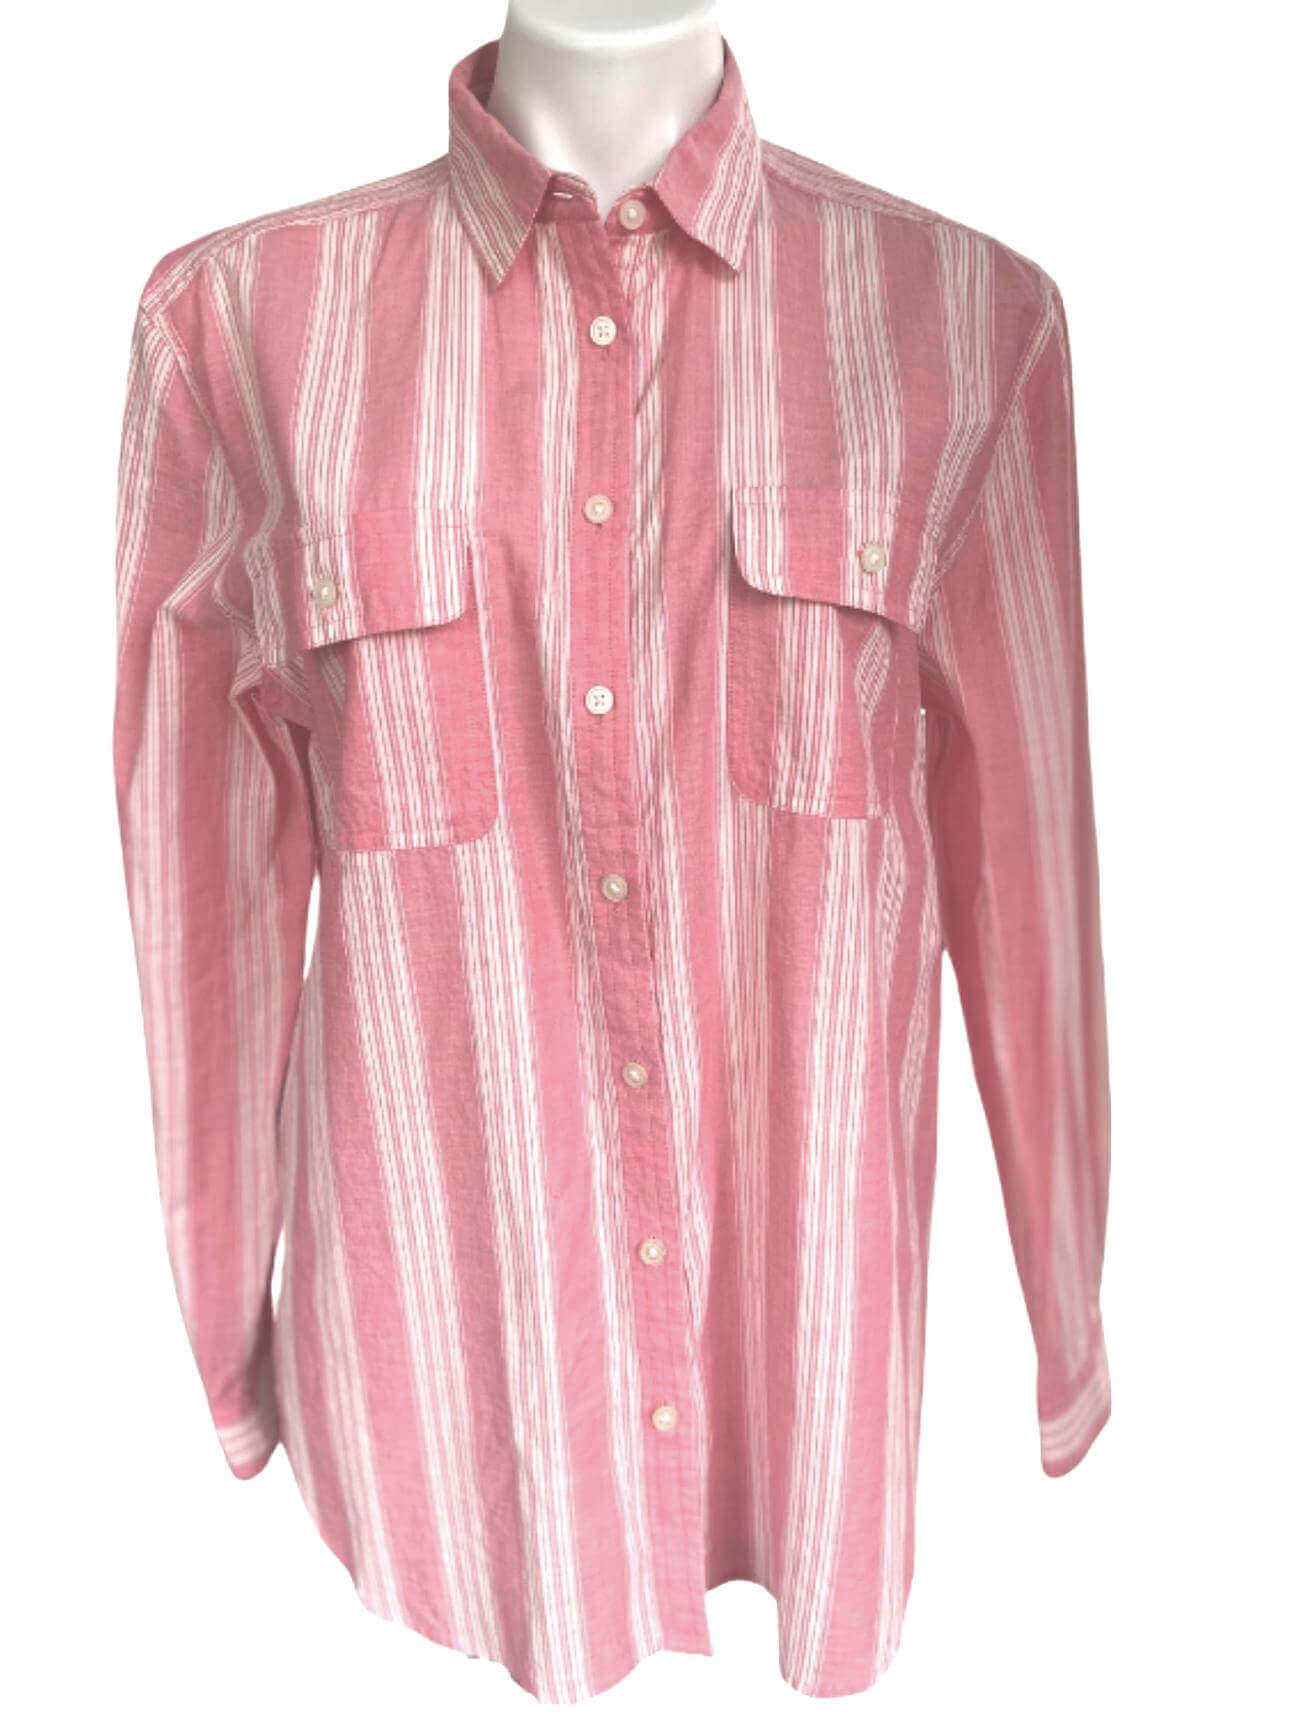 Soft Autumn LOFT pink stripe shirt